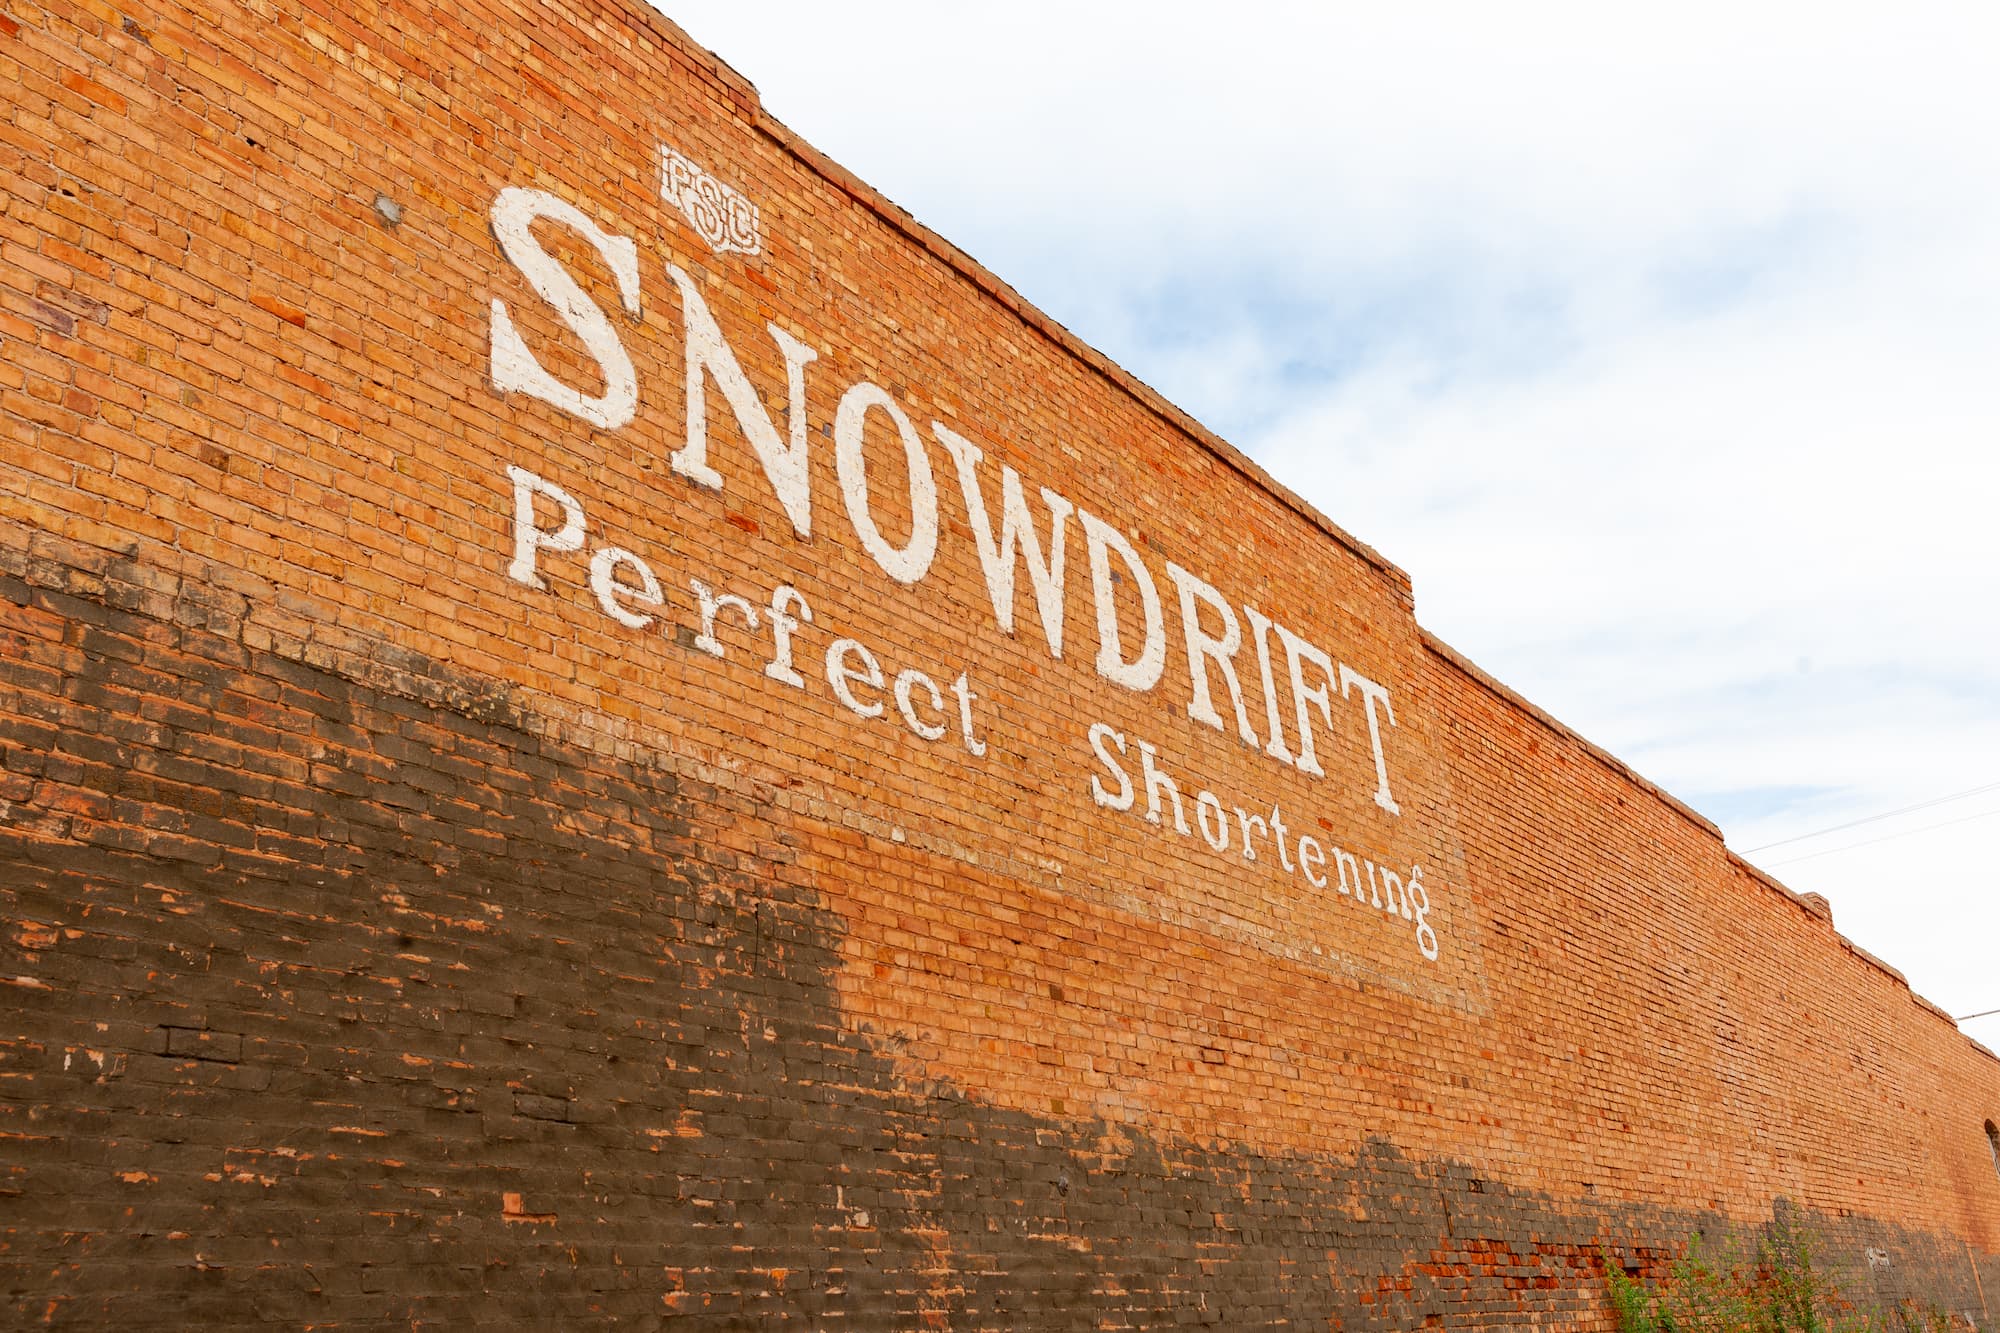 Snowdrift Perfect Shortening Sign